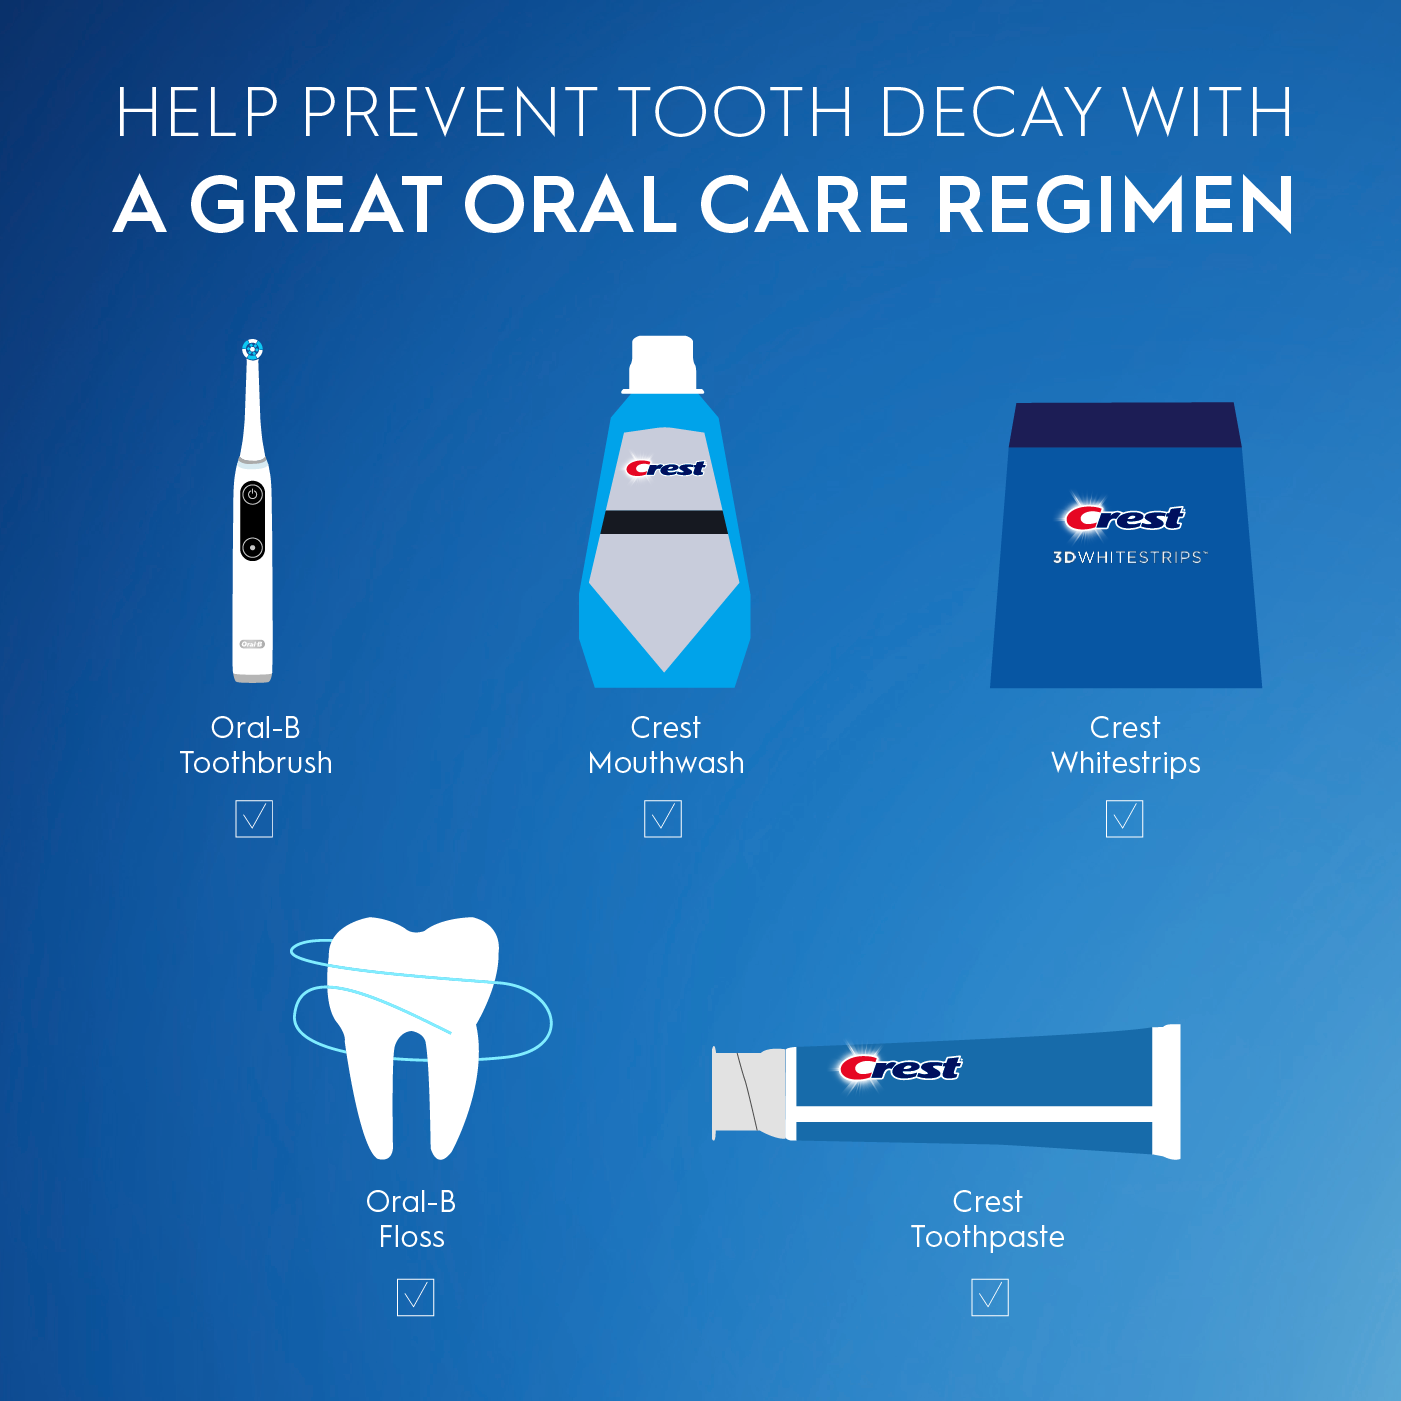 A Great Oral Care Regimen